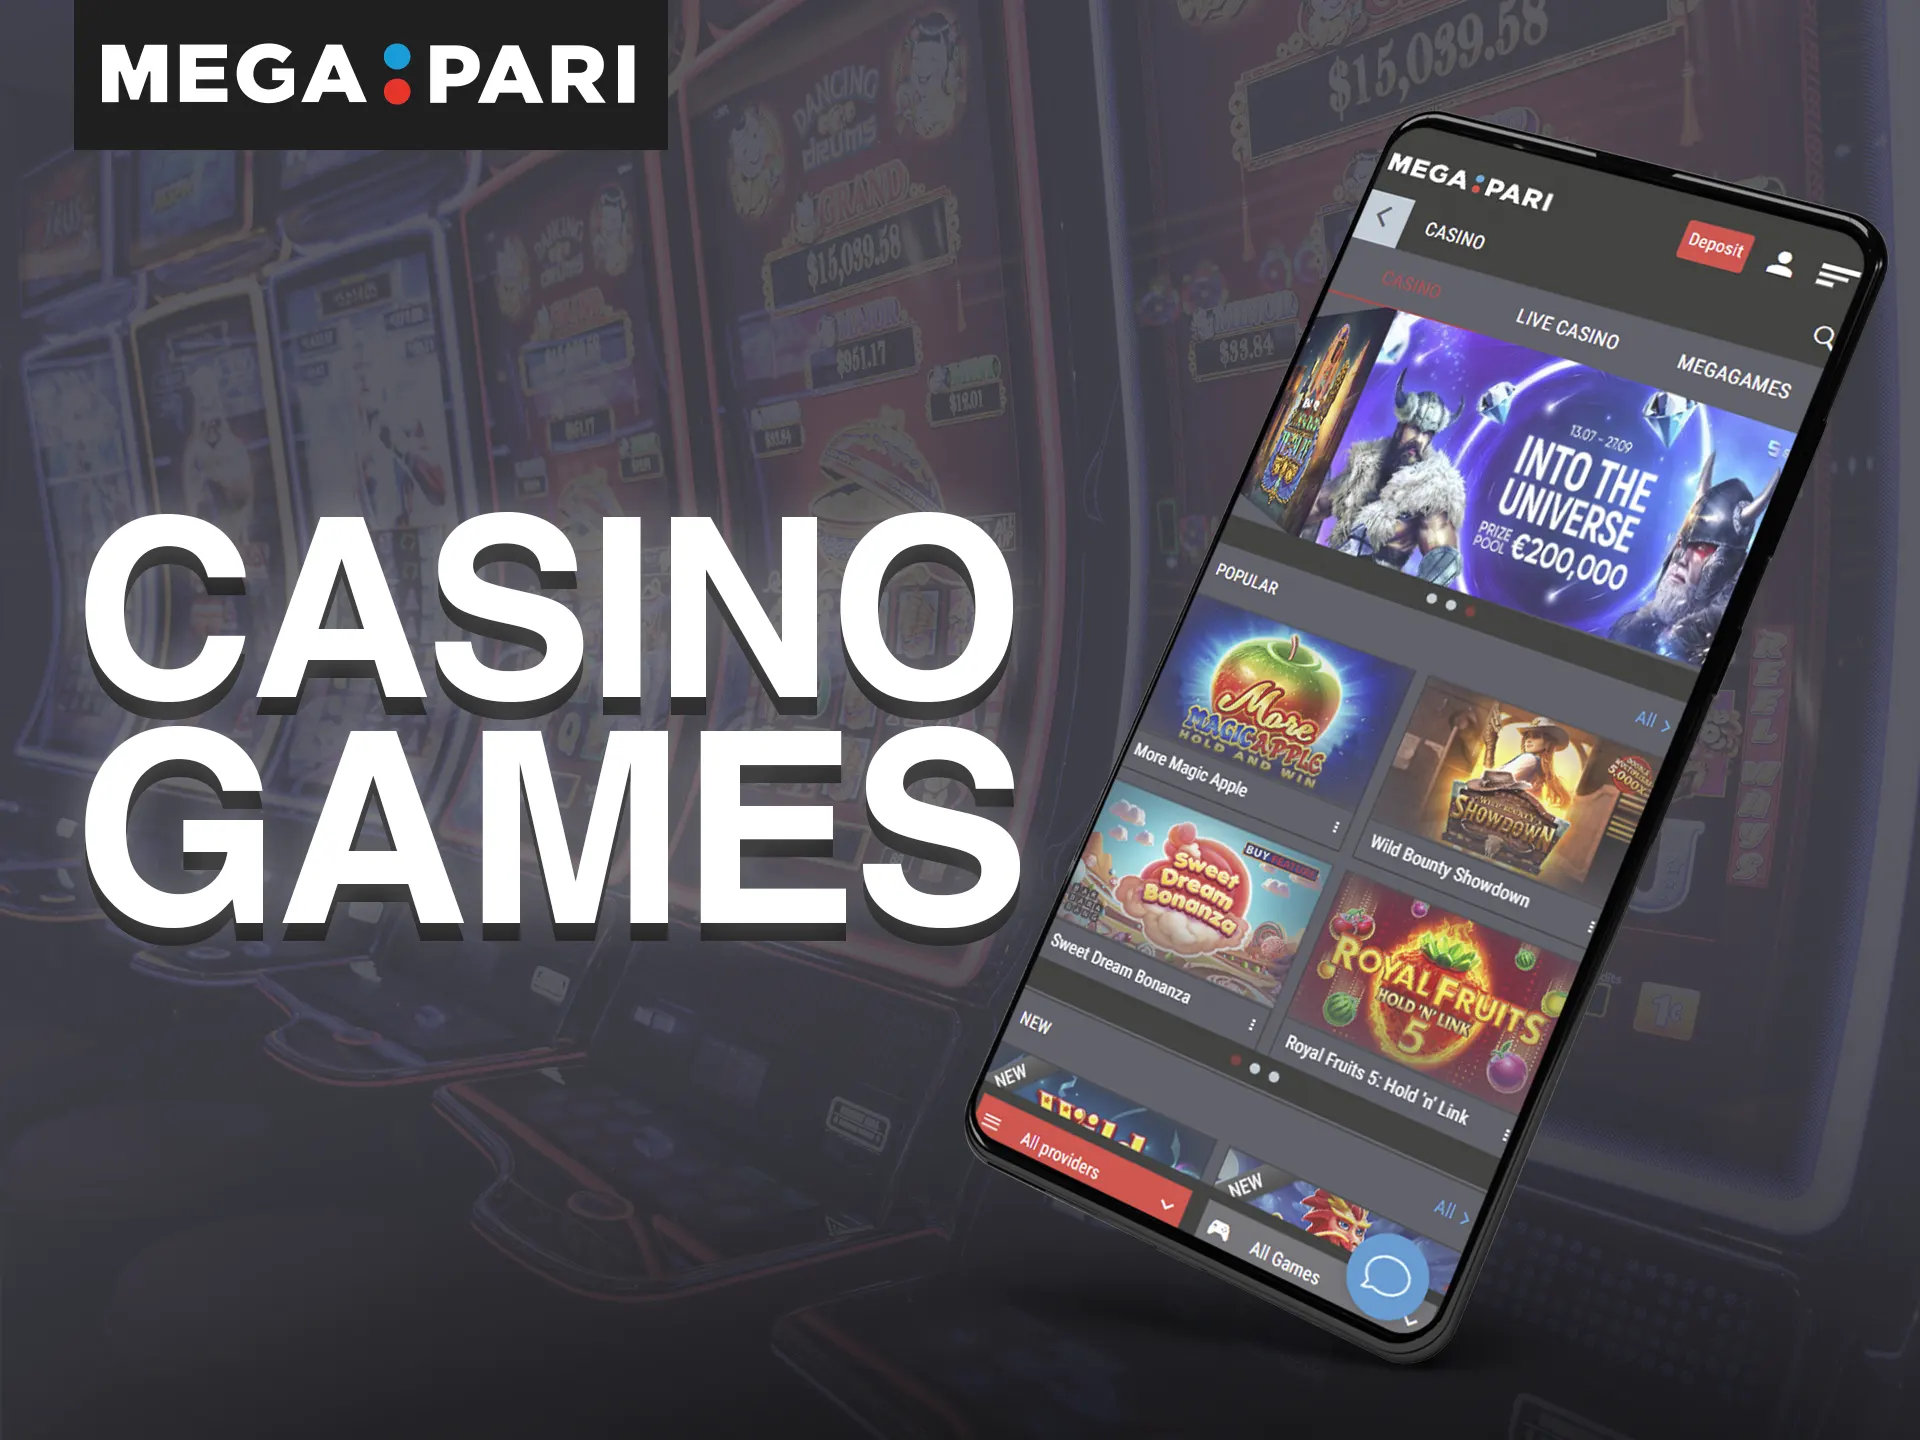 Play online casino games on the Megapari mobile app.